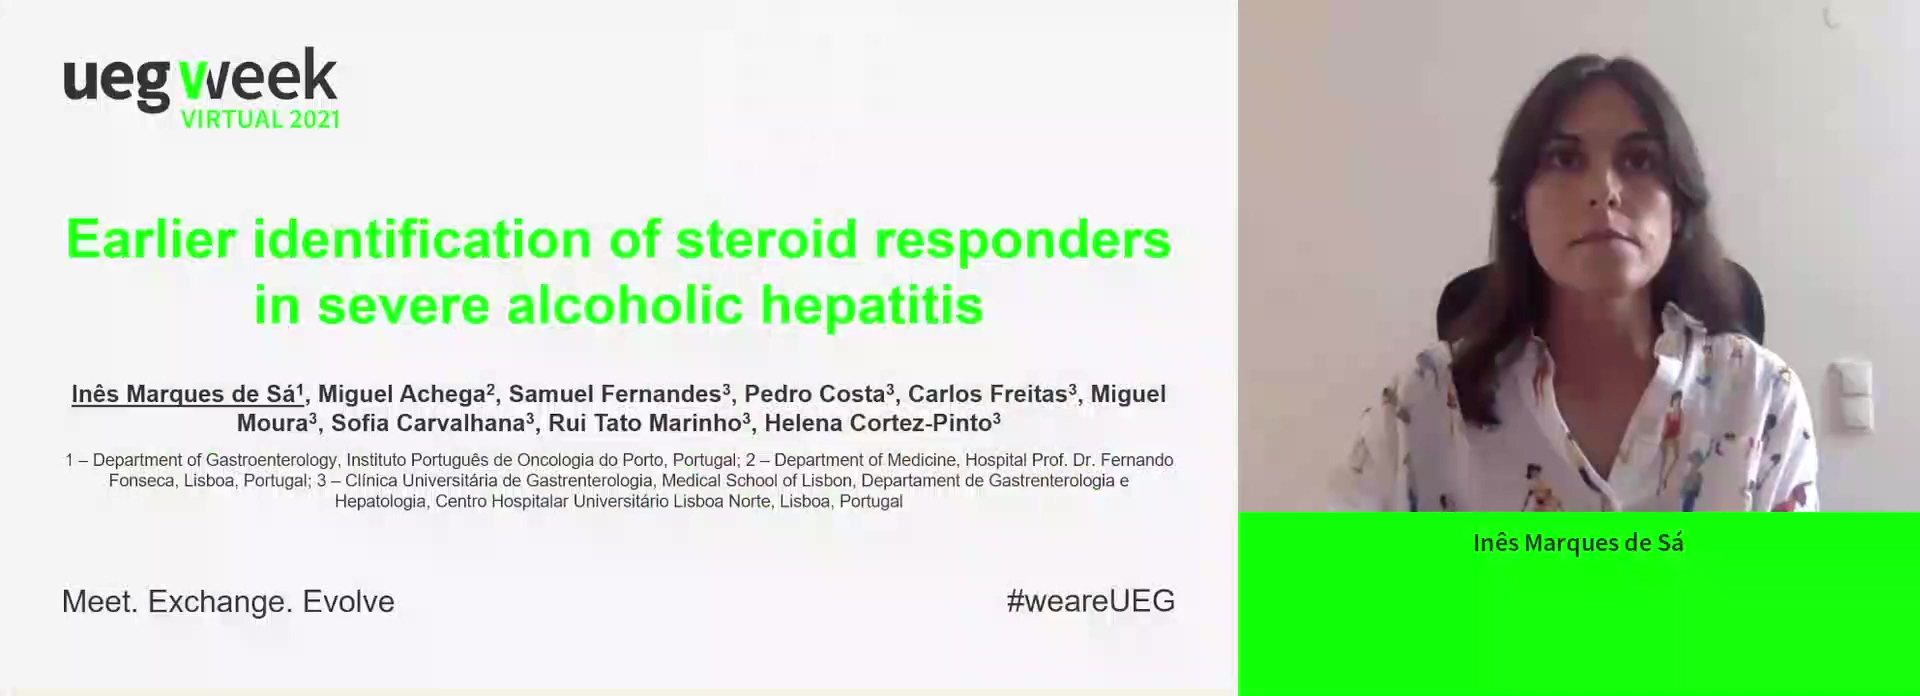 EARLIER IDENTIFICATION OF STEROID RESPONDERS IN SEVERE ALCOHOLIC HEPATITIS